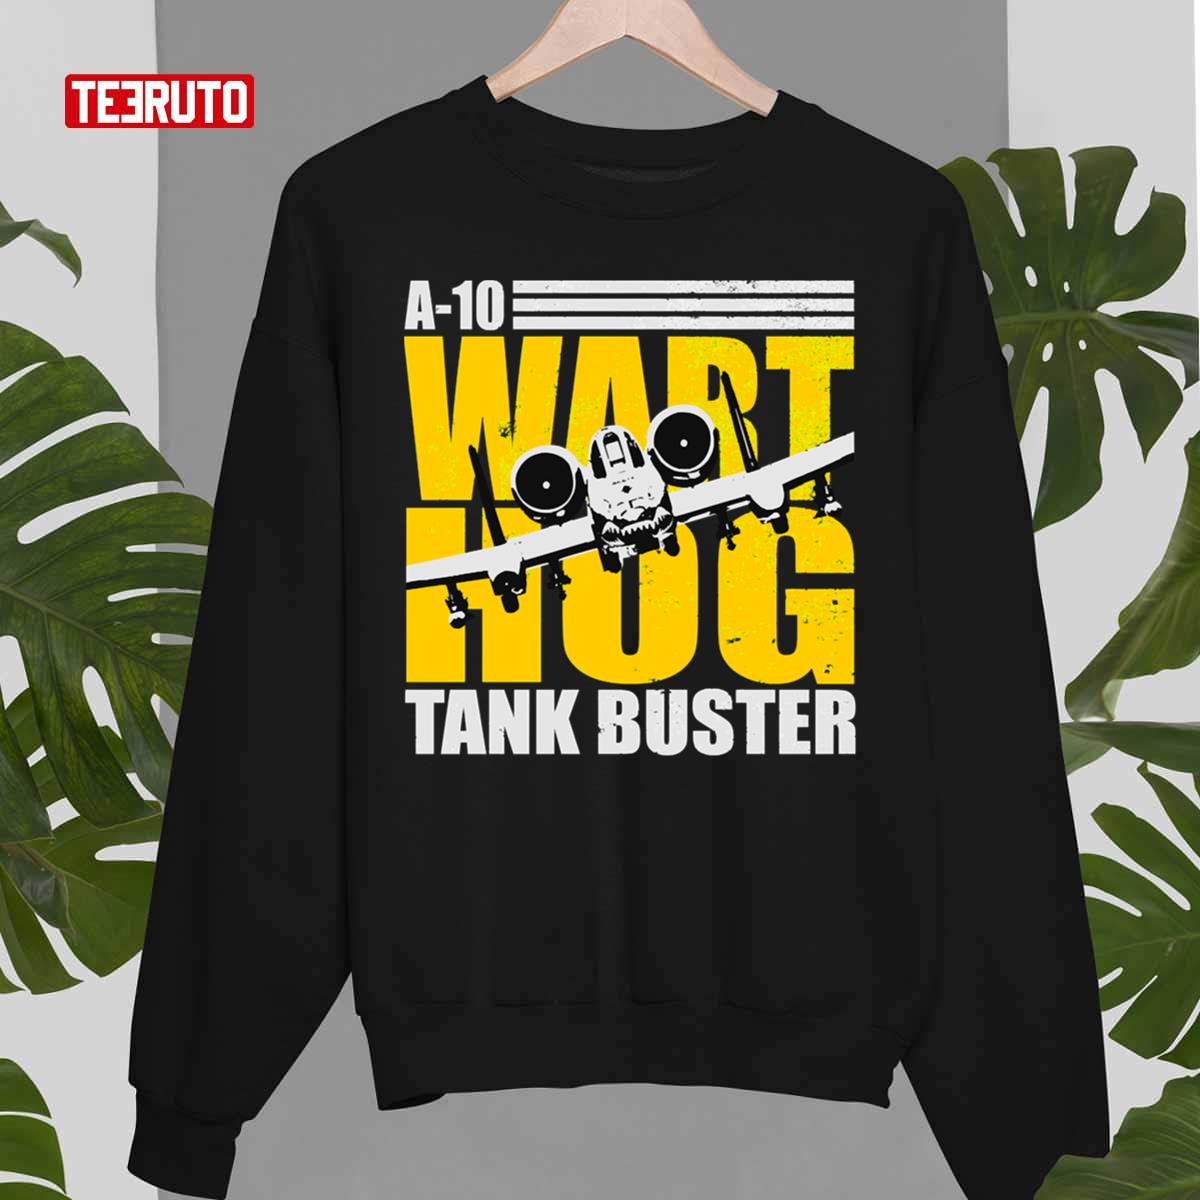 A10 Warthog Tank Buster Unisex T-Shirt